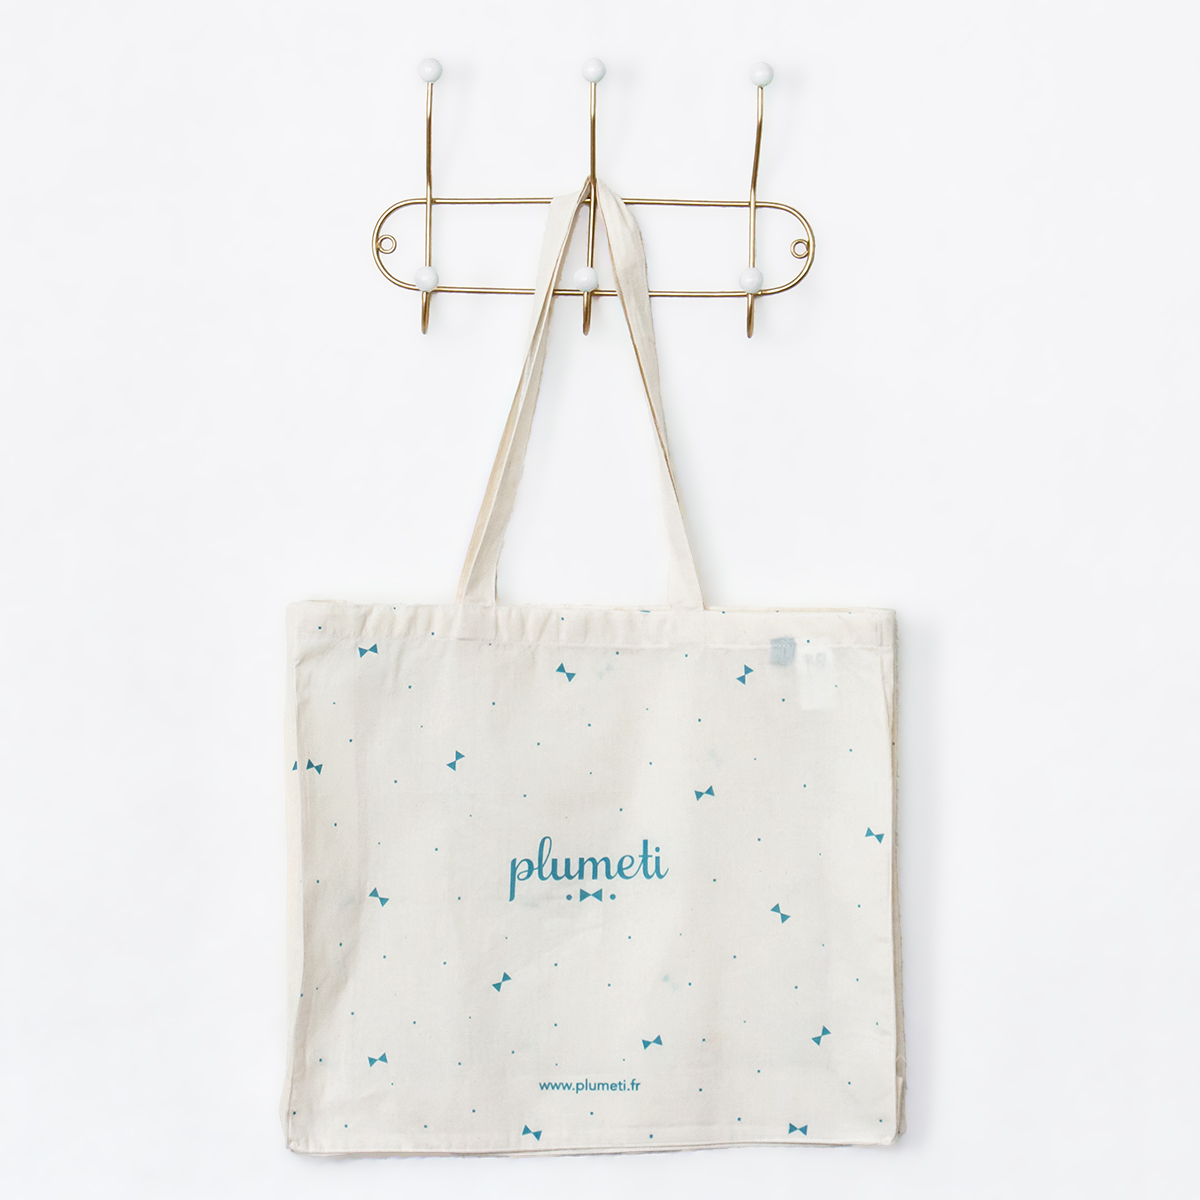 Design tote bag Plumeti - Illustration - Corporate - Design produit - Charlène Roudier